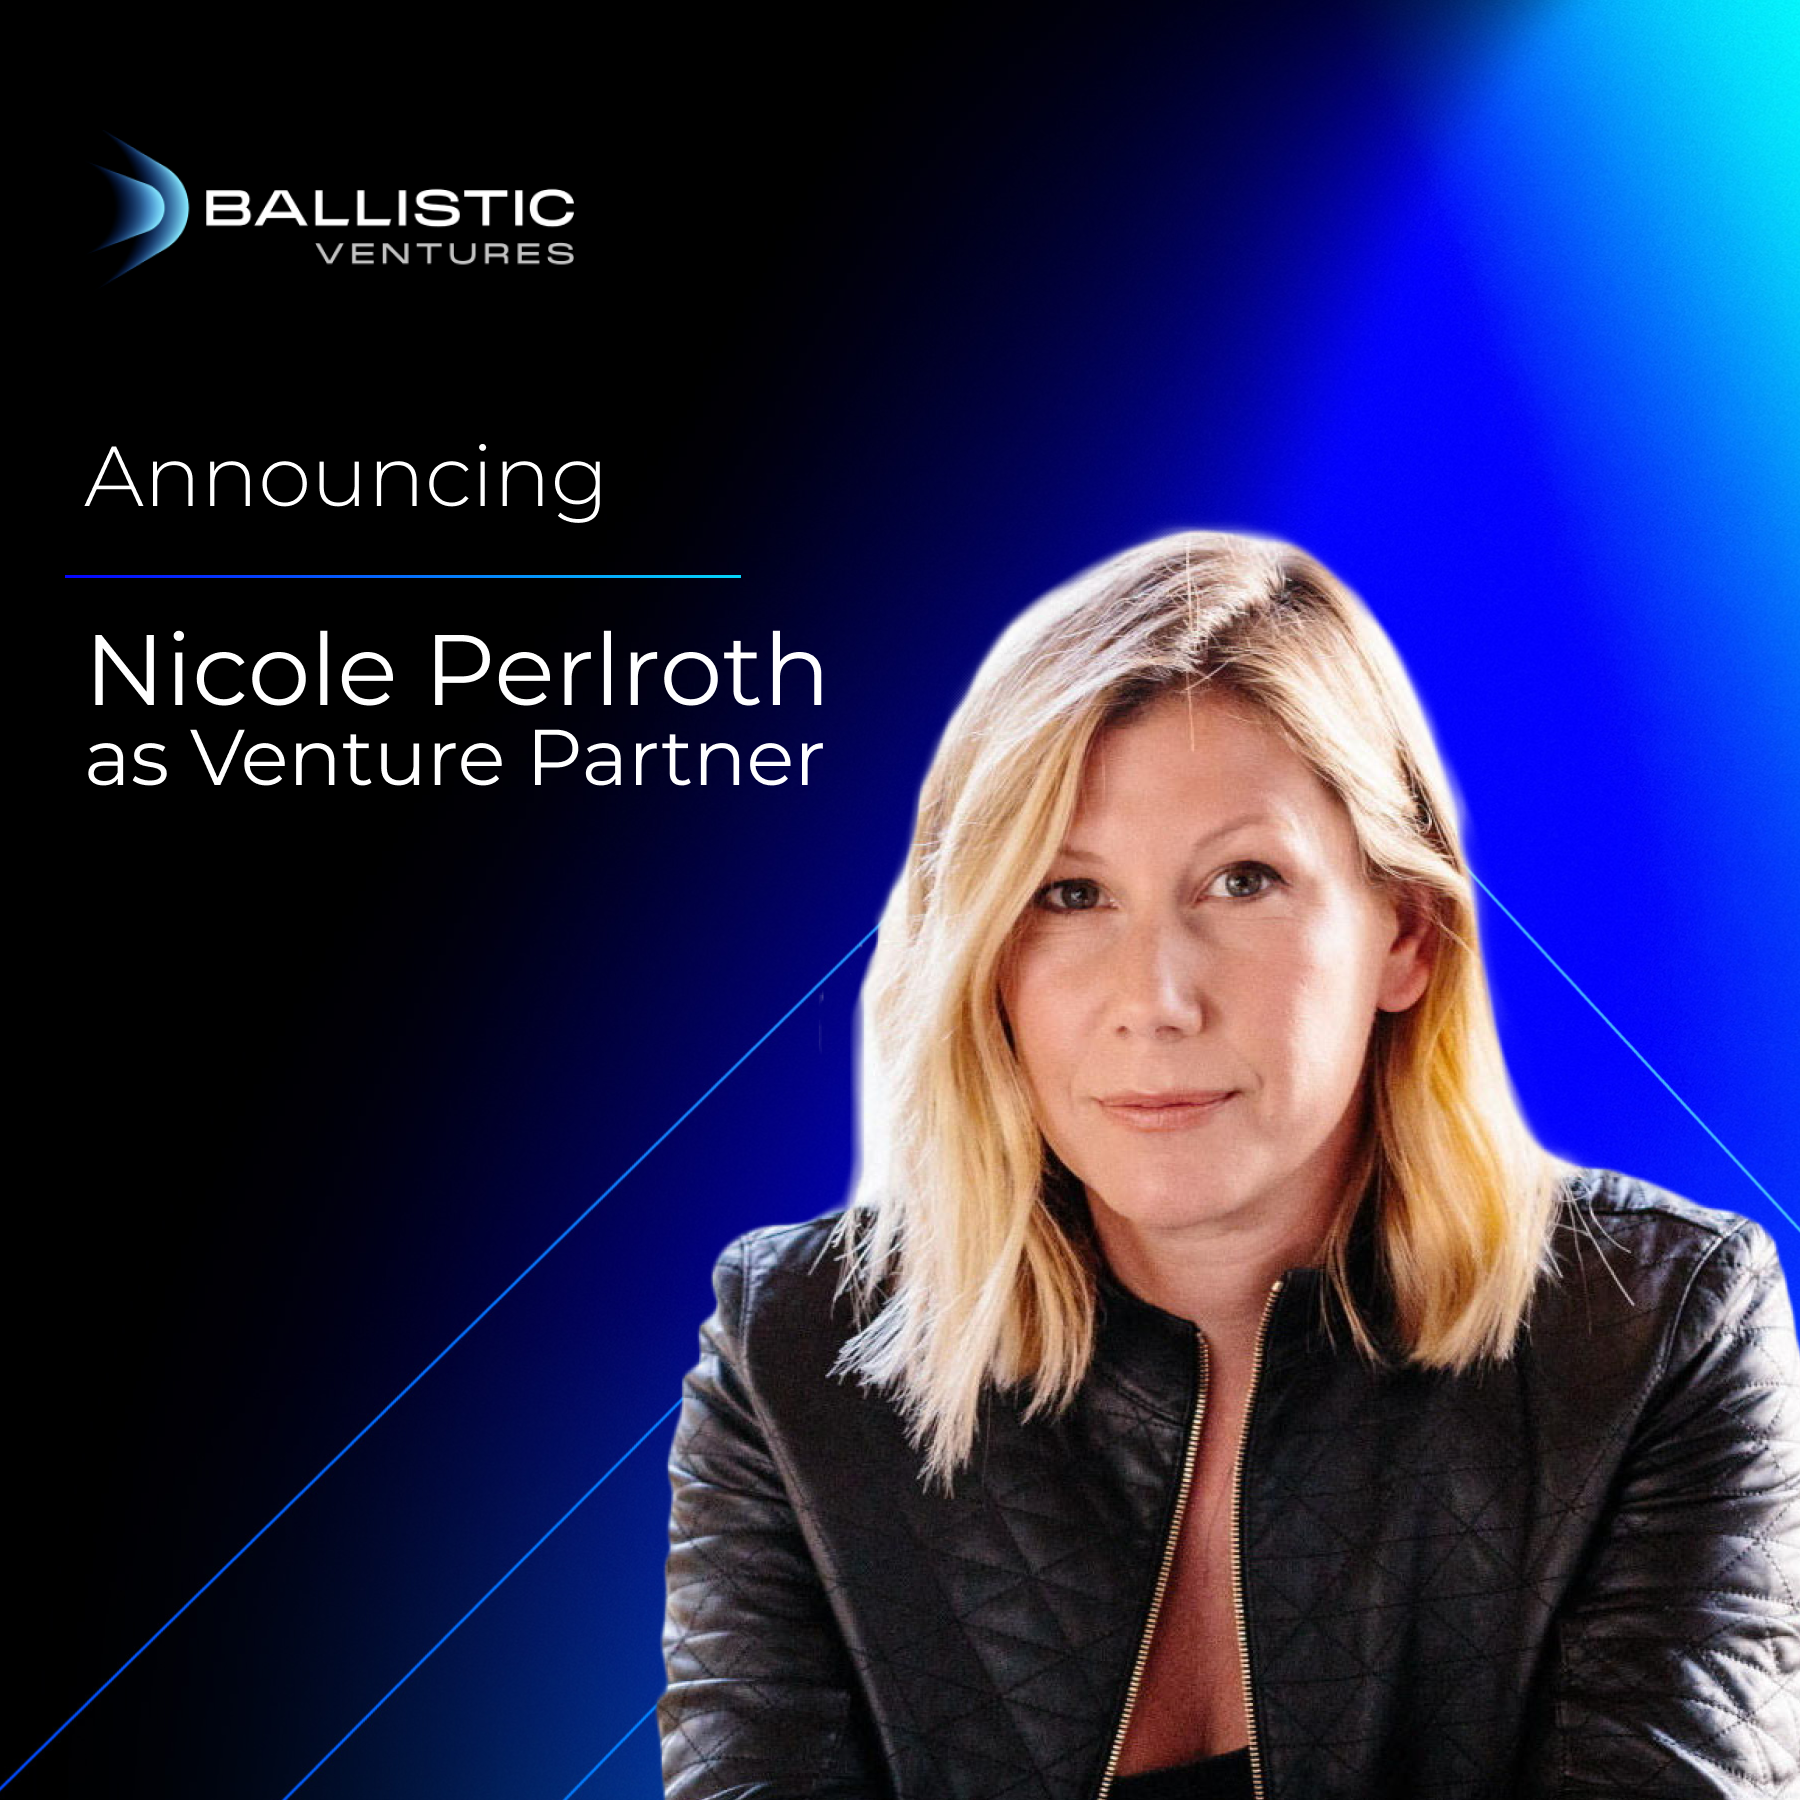 Nicole Perlroth joins Ballistic Ventures as Venture Partner